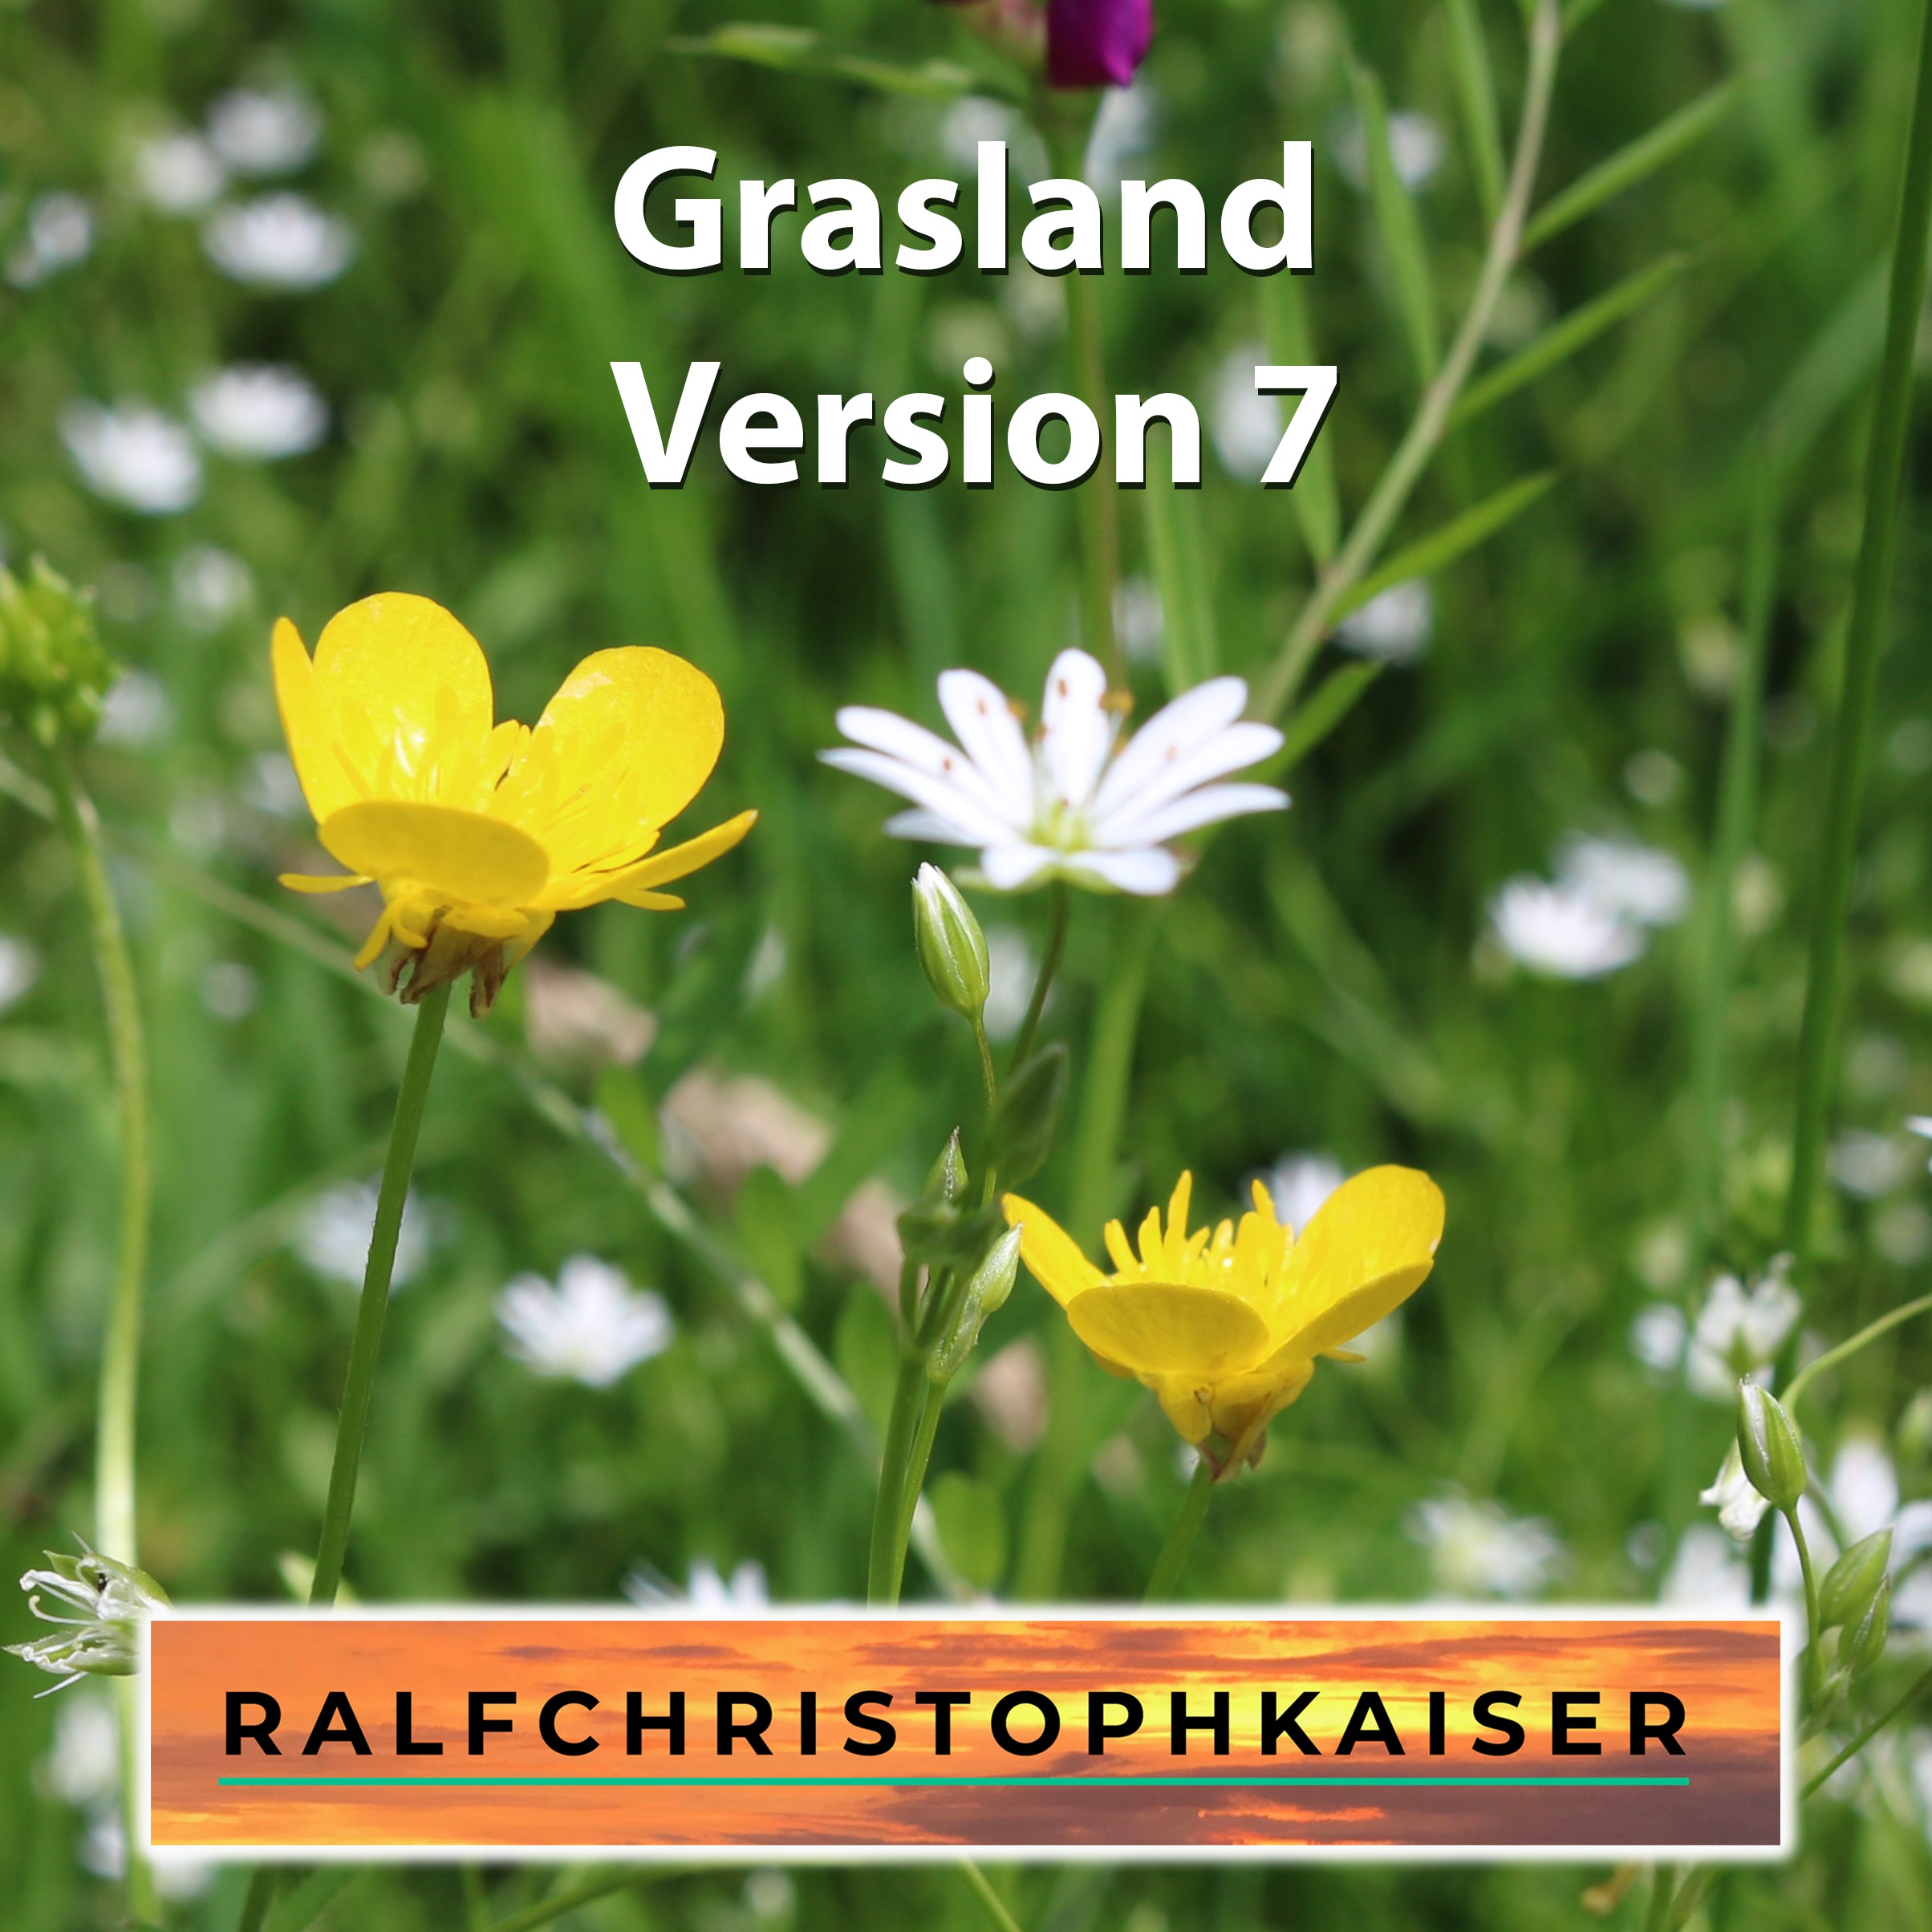 Grasland in E-Moll Version 7 by Ralf Christoph Kaiser Full Score Leadsheet and Parts - ralfchristophkaiser.com Musik und Noten